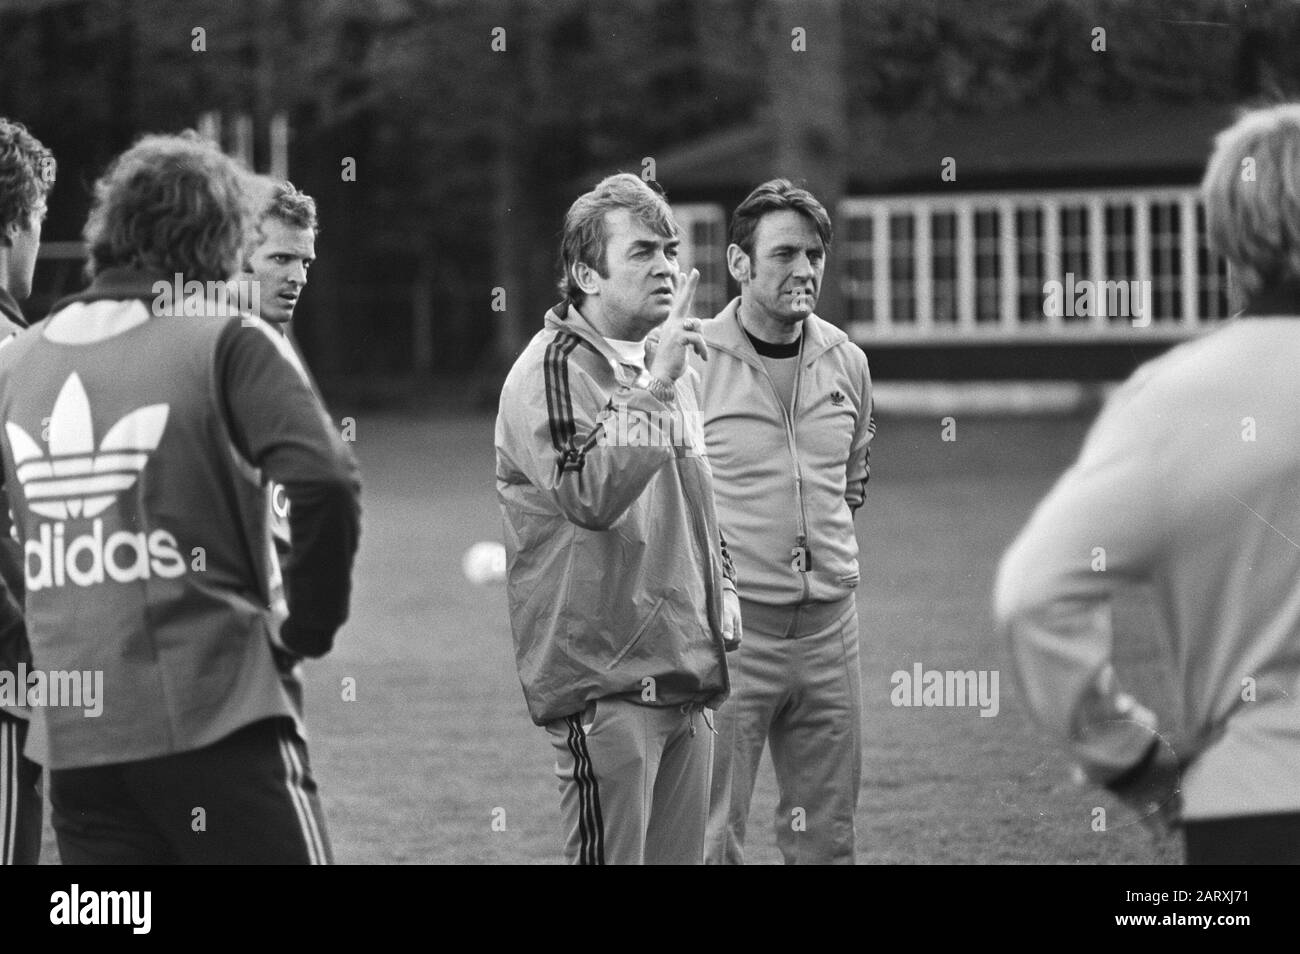 Training Dutch team in Zeist; trainers Happel (l) and Zwartkruis Date: May 12, 1978 Location: Utrecht, Zeist Keywords: TRAINERS, sport, football Stock Photo